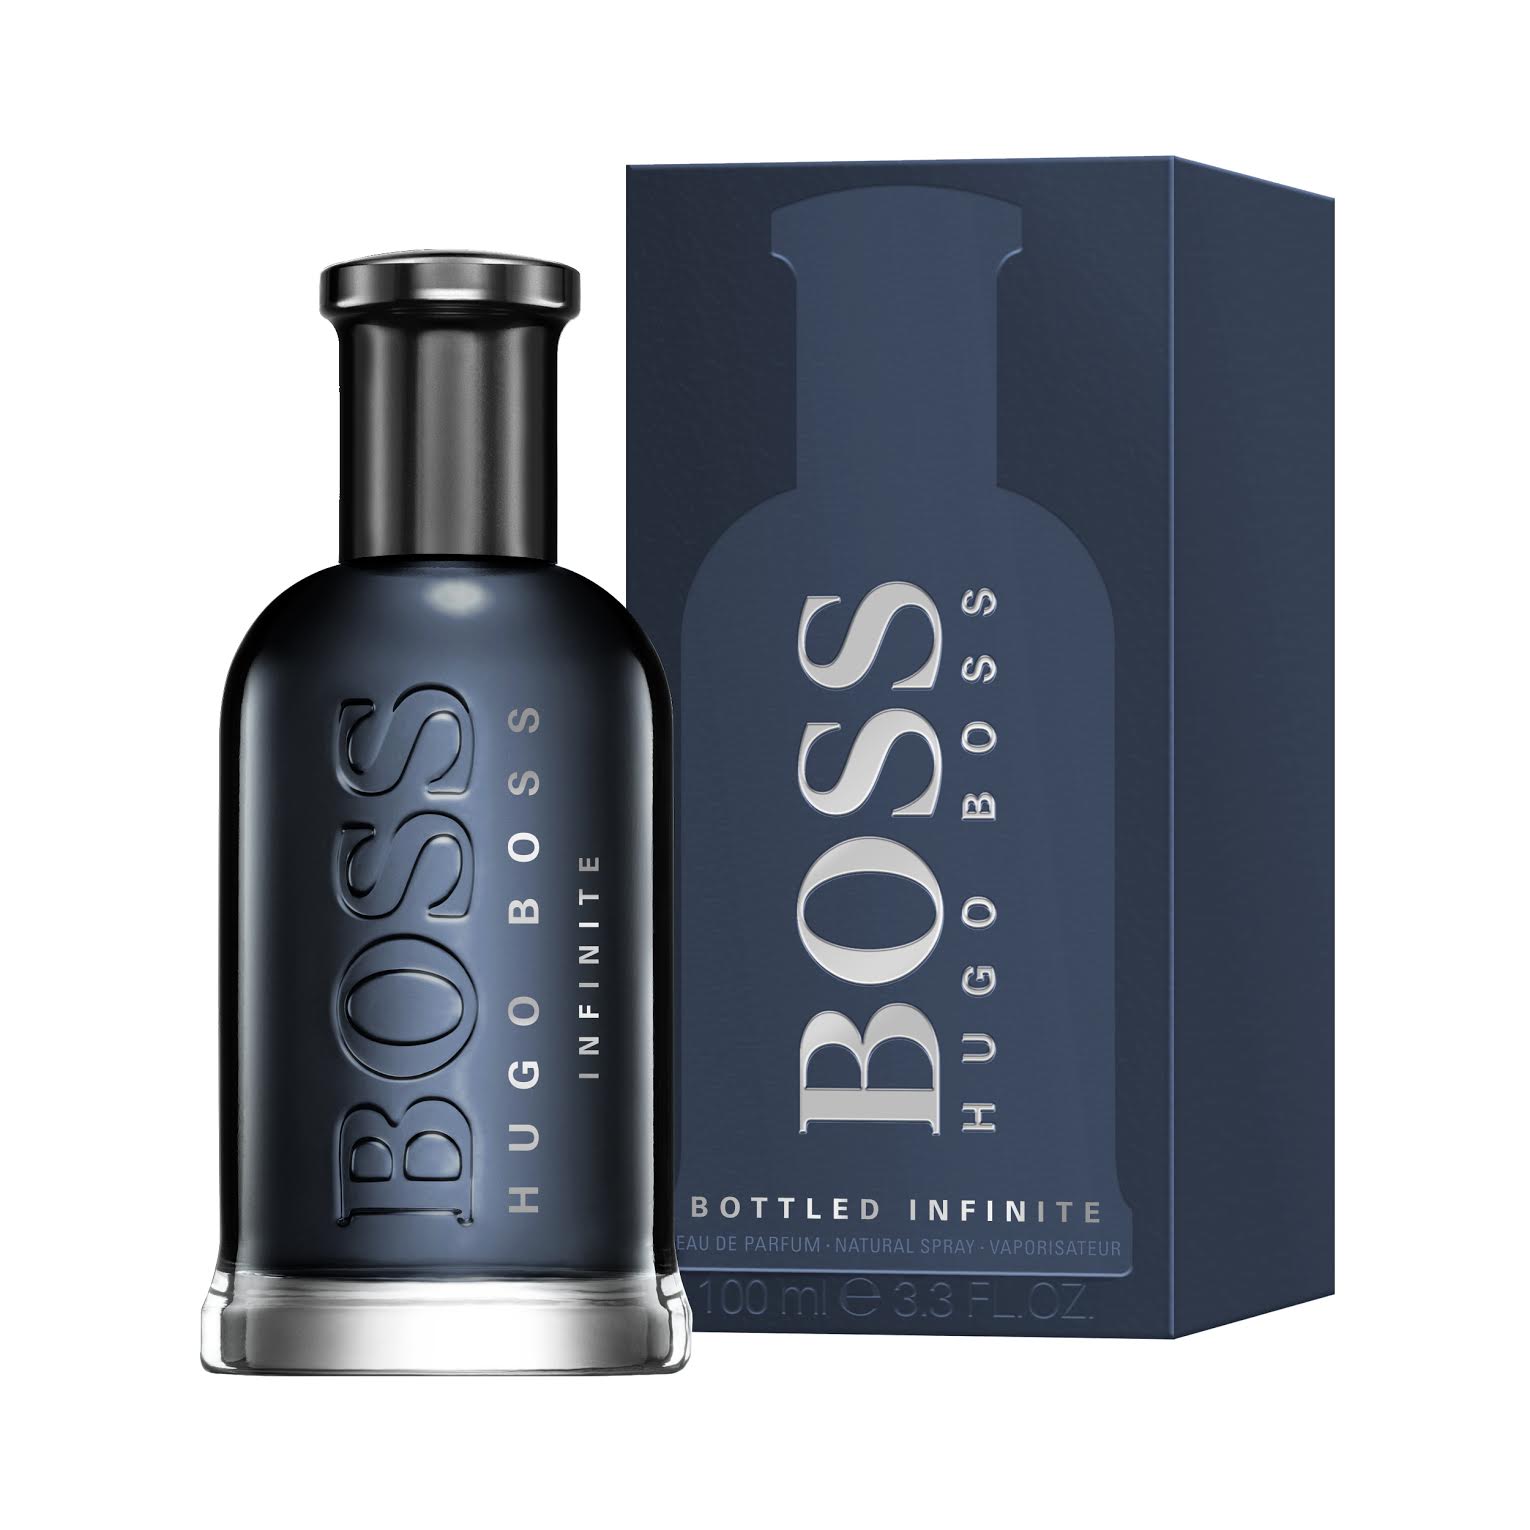 Hugo Boss proves that fragrances are 